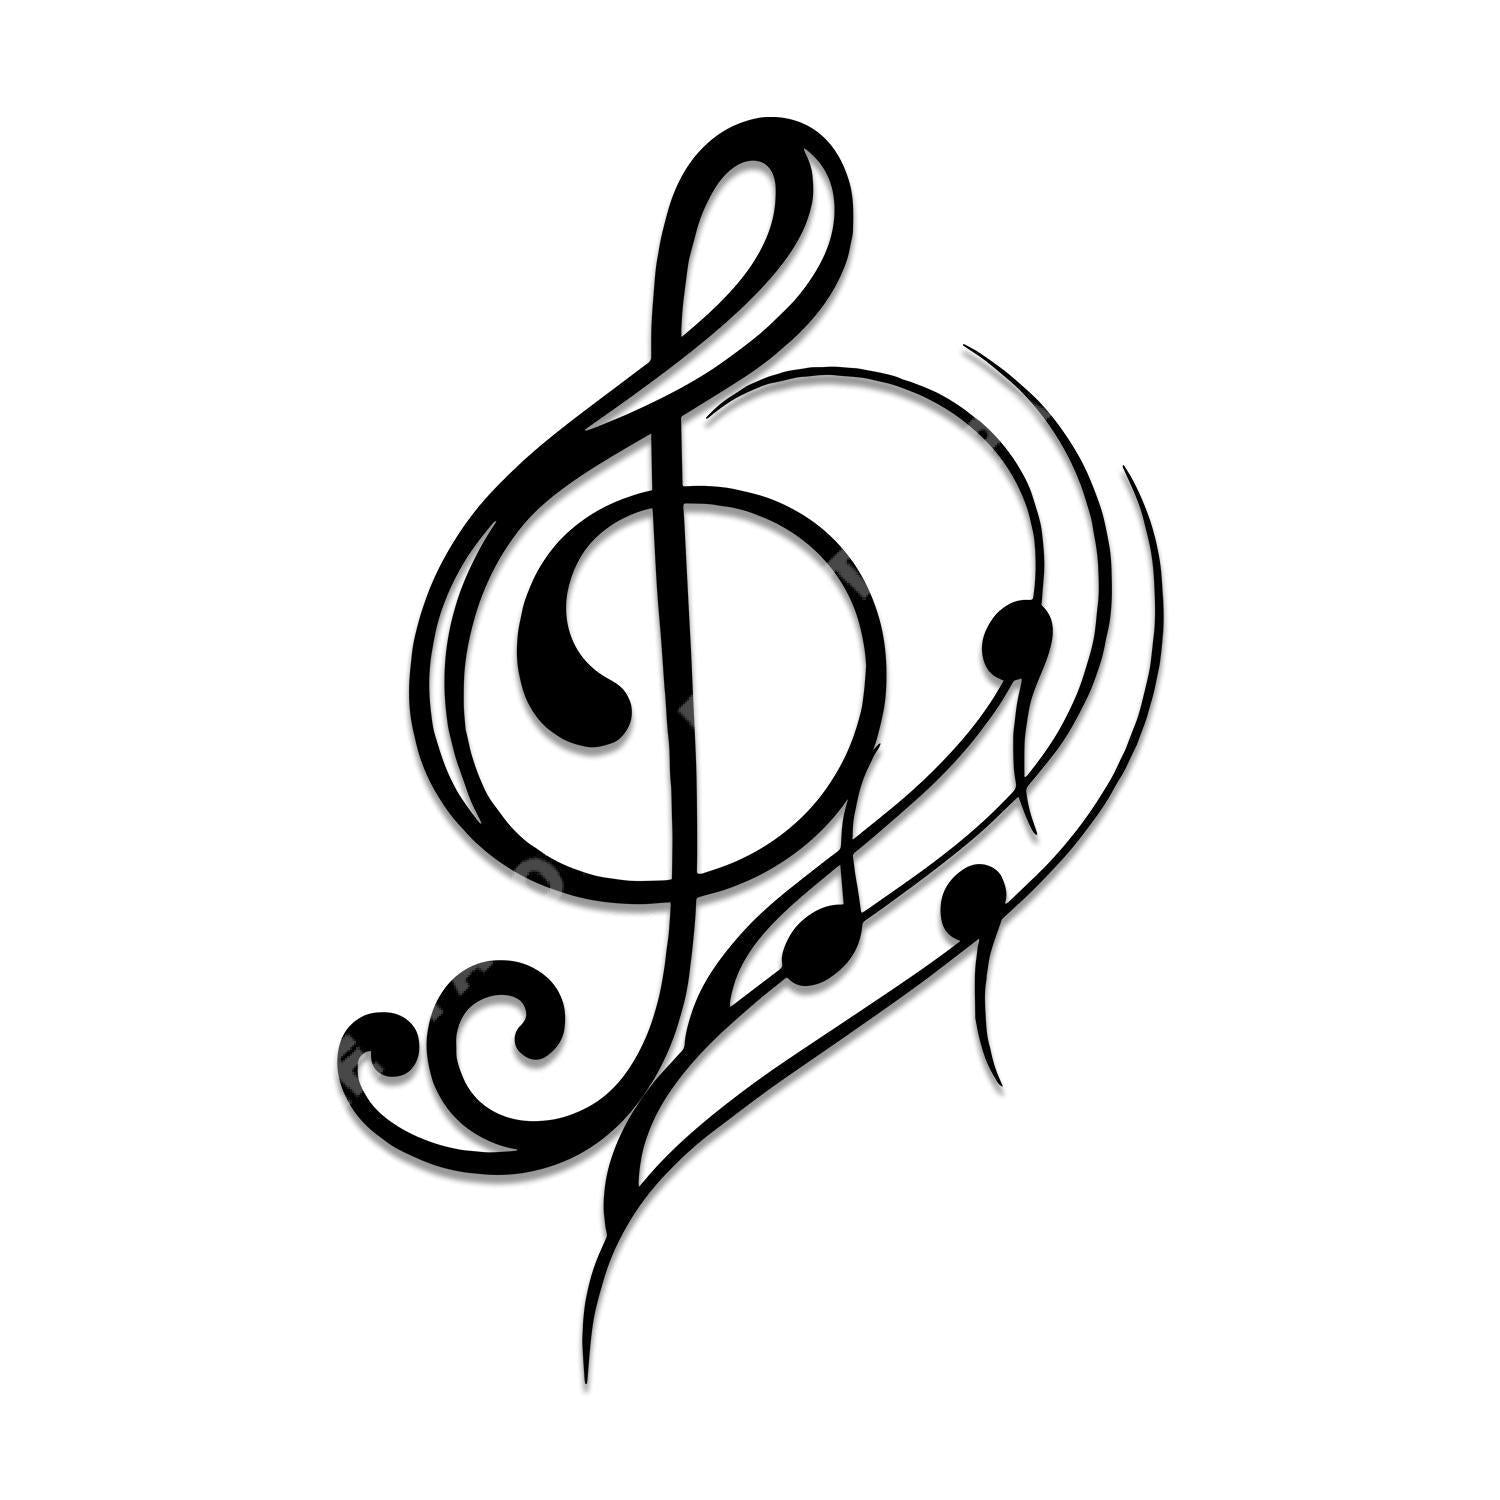 g-clef-notes-on-music-staff-metal-art-music-teacher-gift-nalaprint